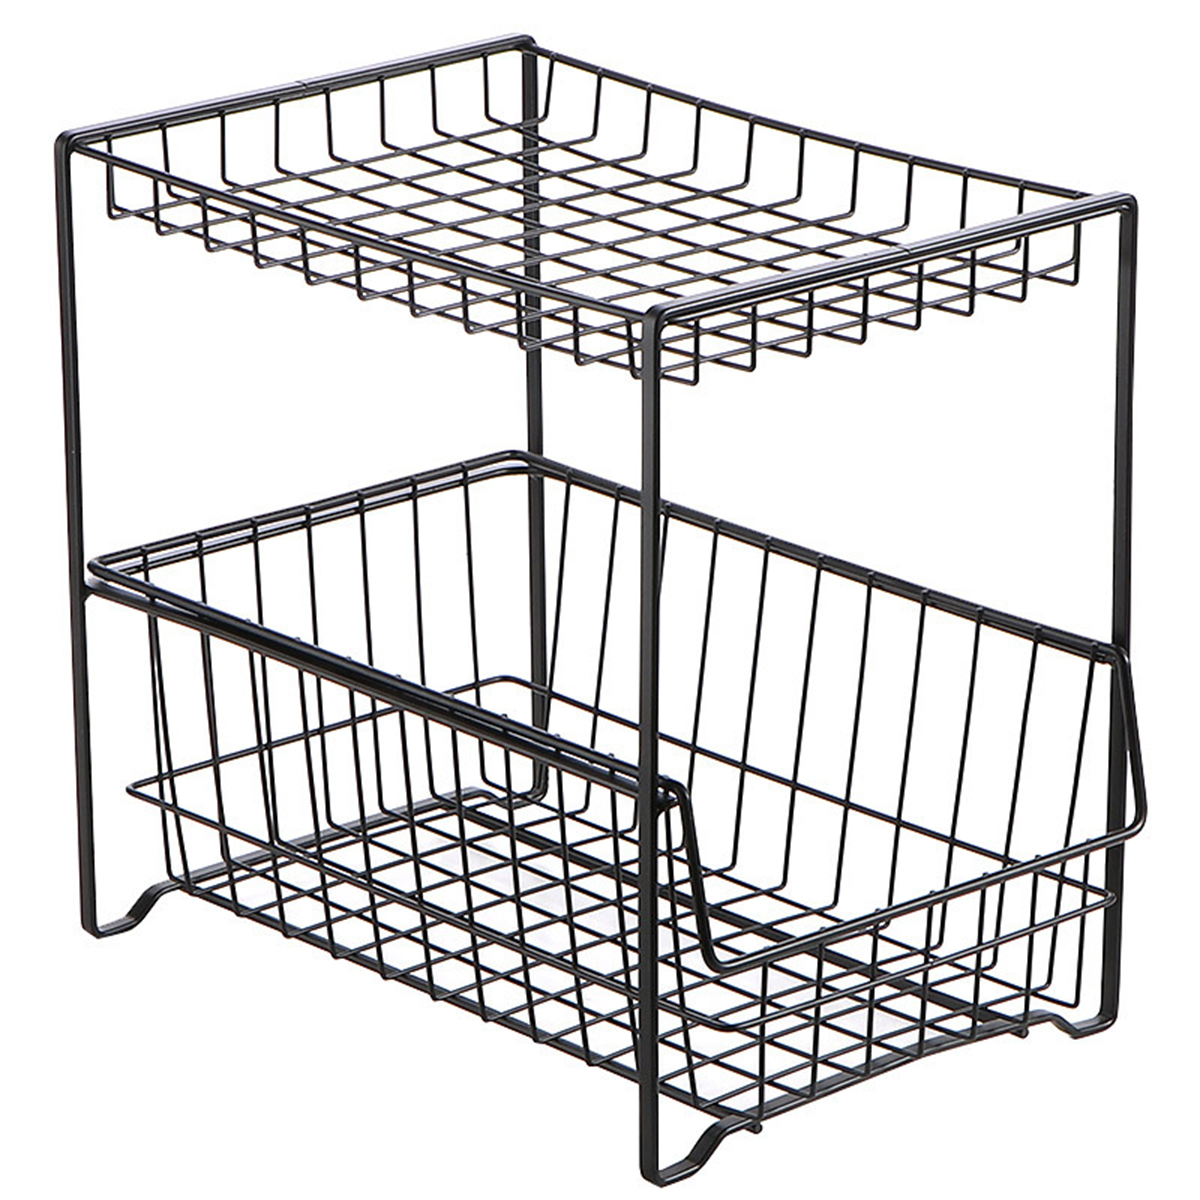 Find 2 Tier Kitchen Cabinet Organizer Slides Under Holder Storage Rack Shelf Basket for Sale on Gipsybee.com with cryptocurrencies